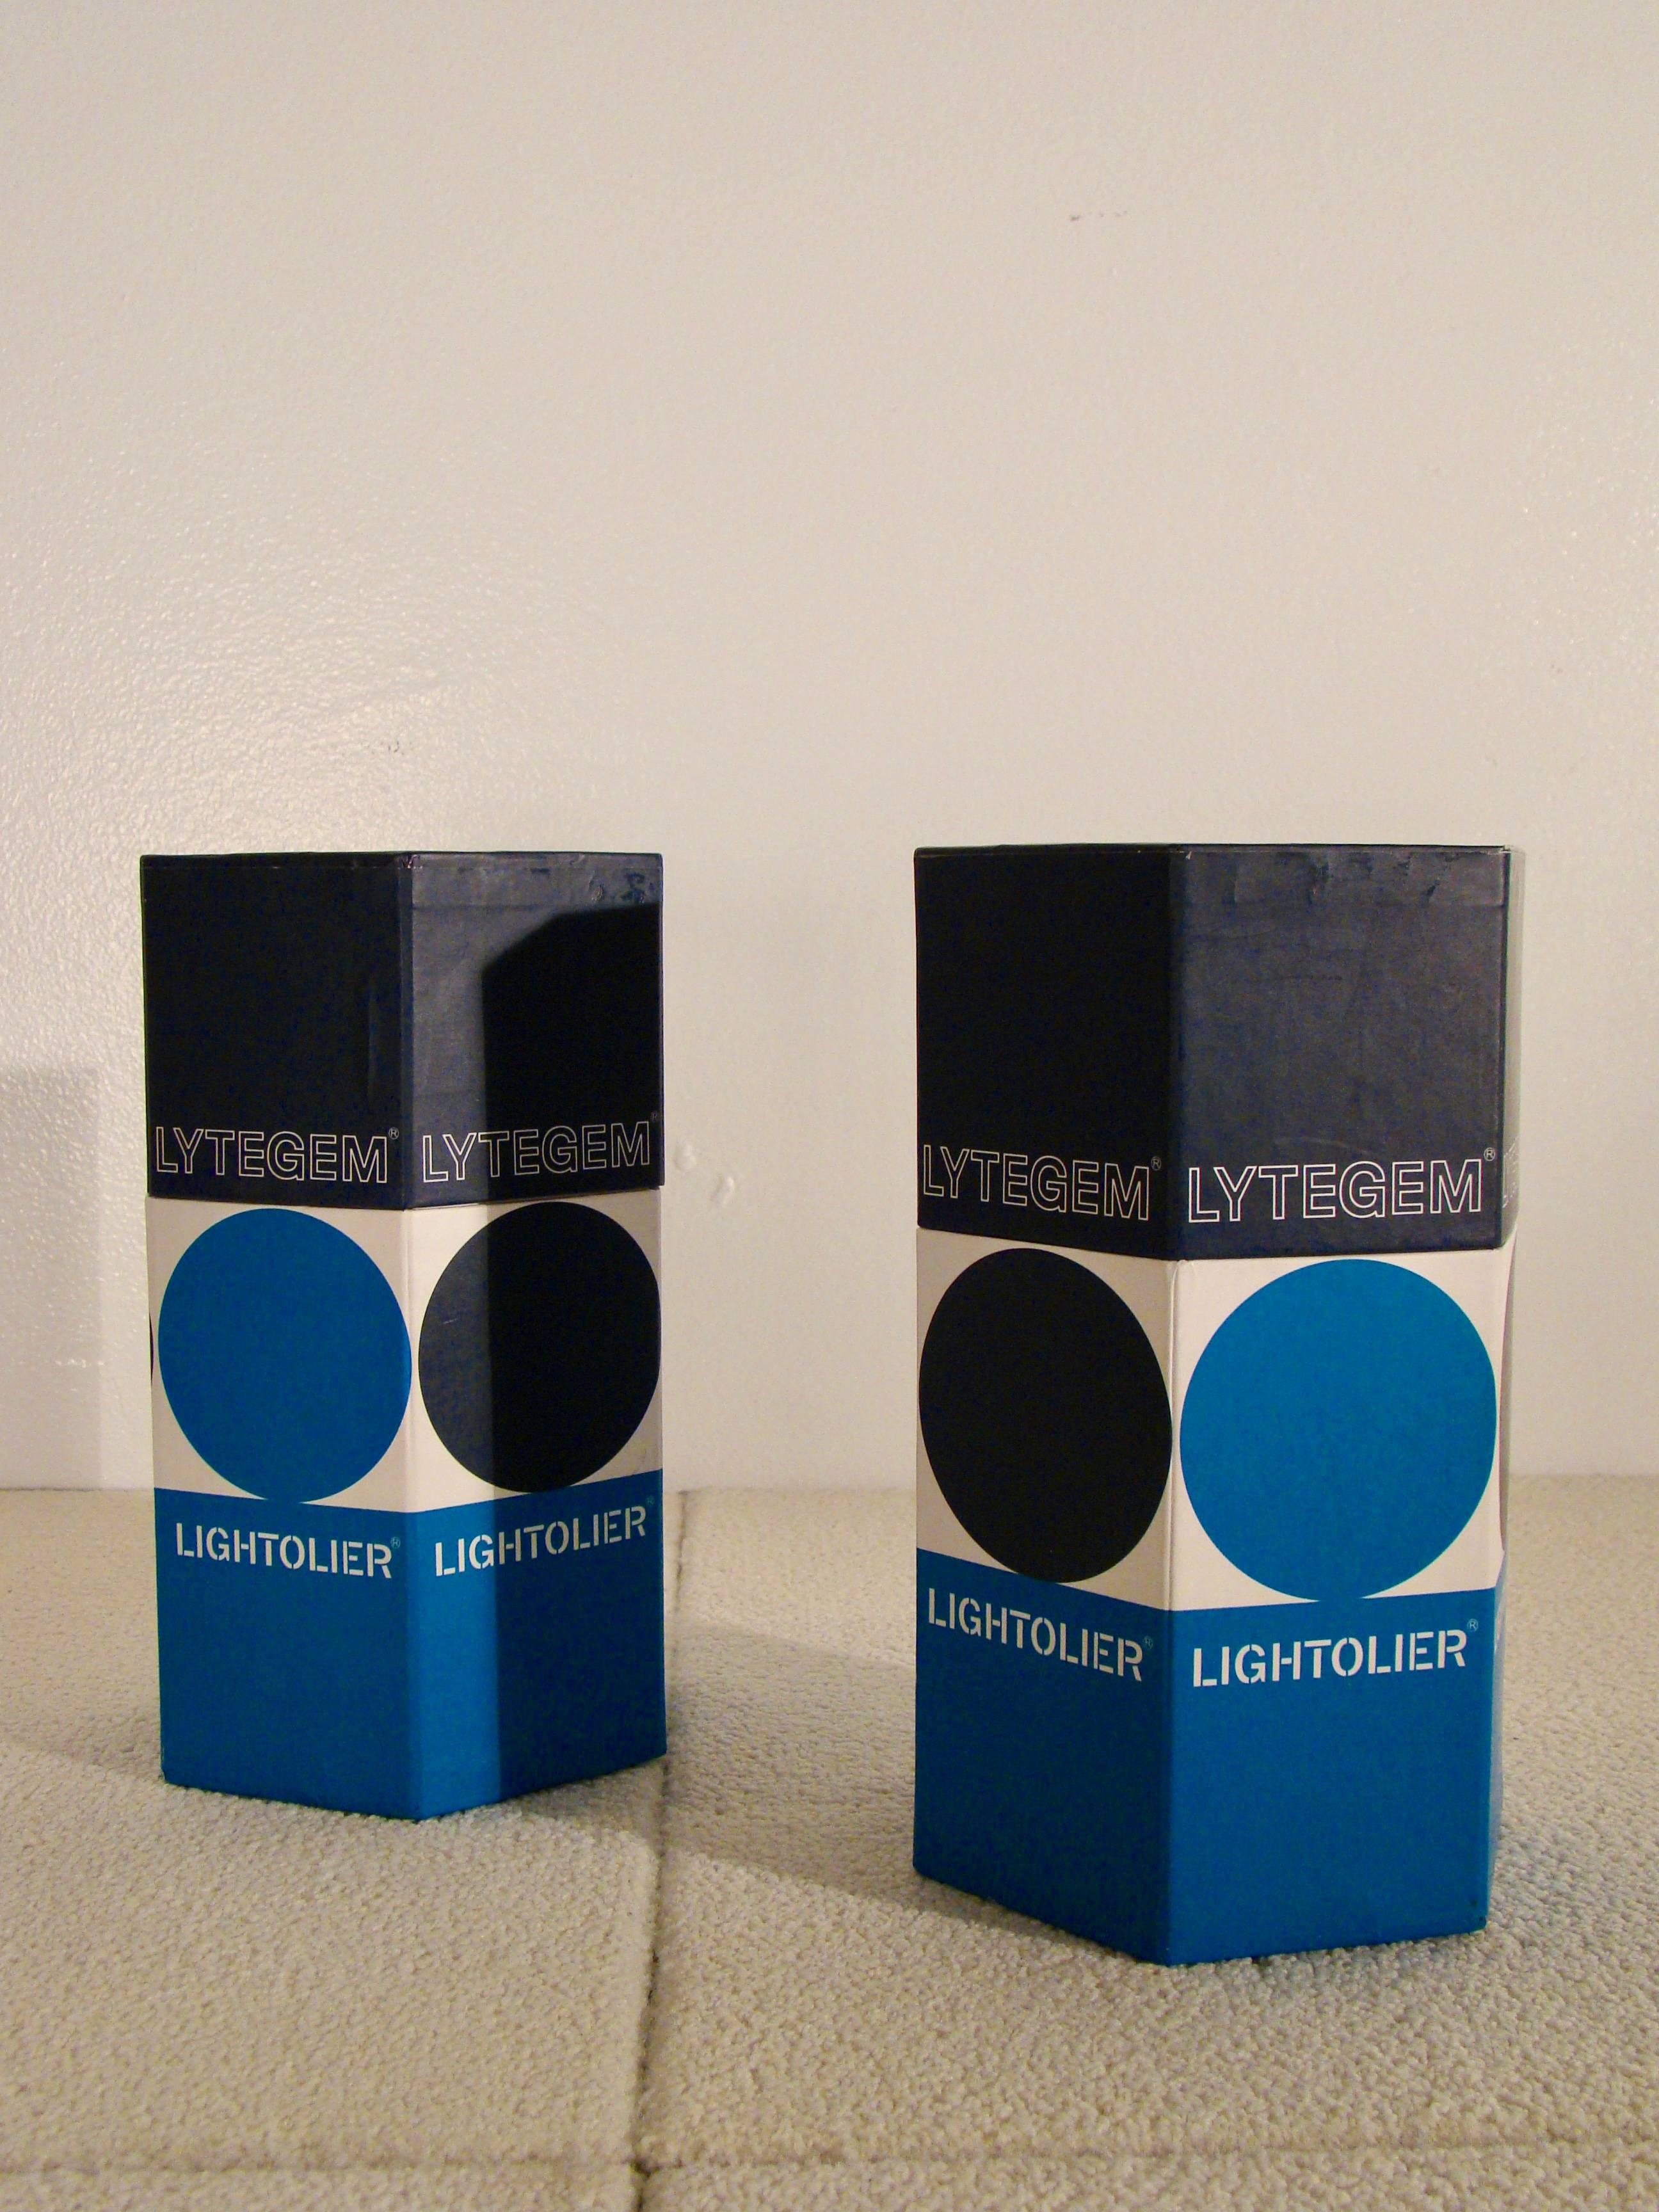 Michael Lax Lytegem Lightolie, Pair of Telescopic Eyeball Tasks Lamps in Box In Excellent Condition For Sale In Denver, CO